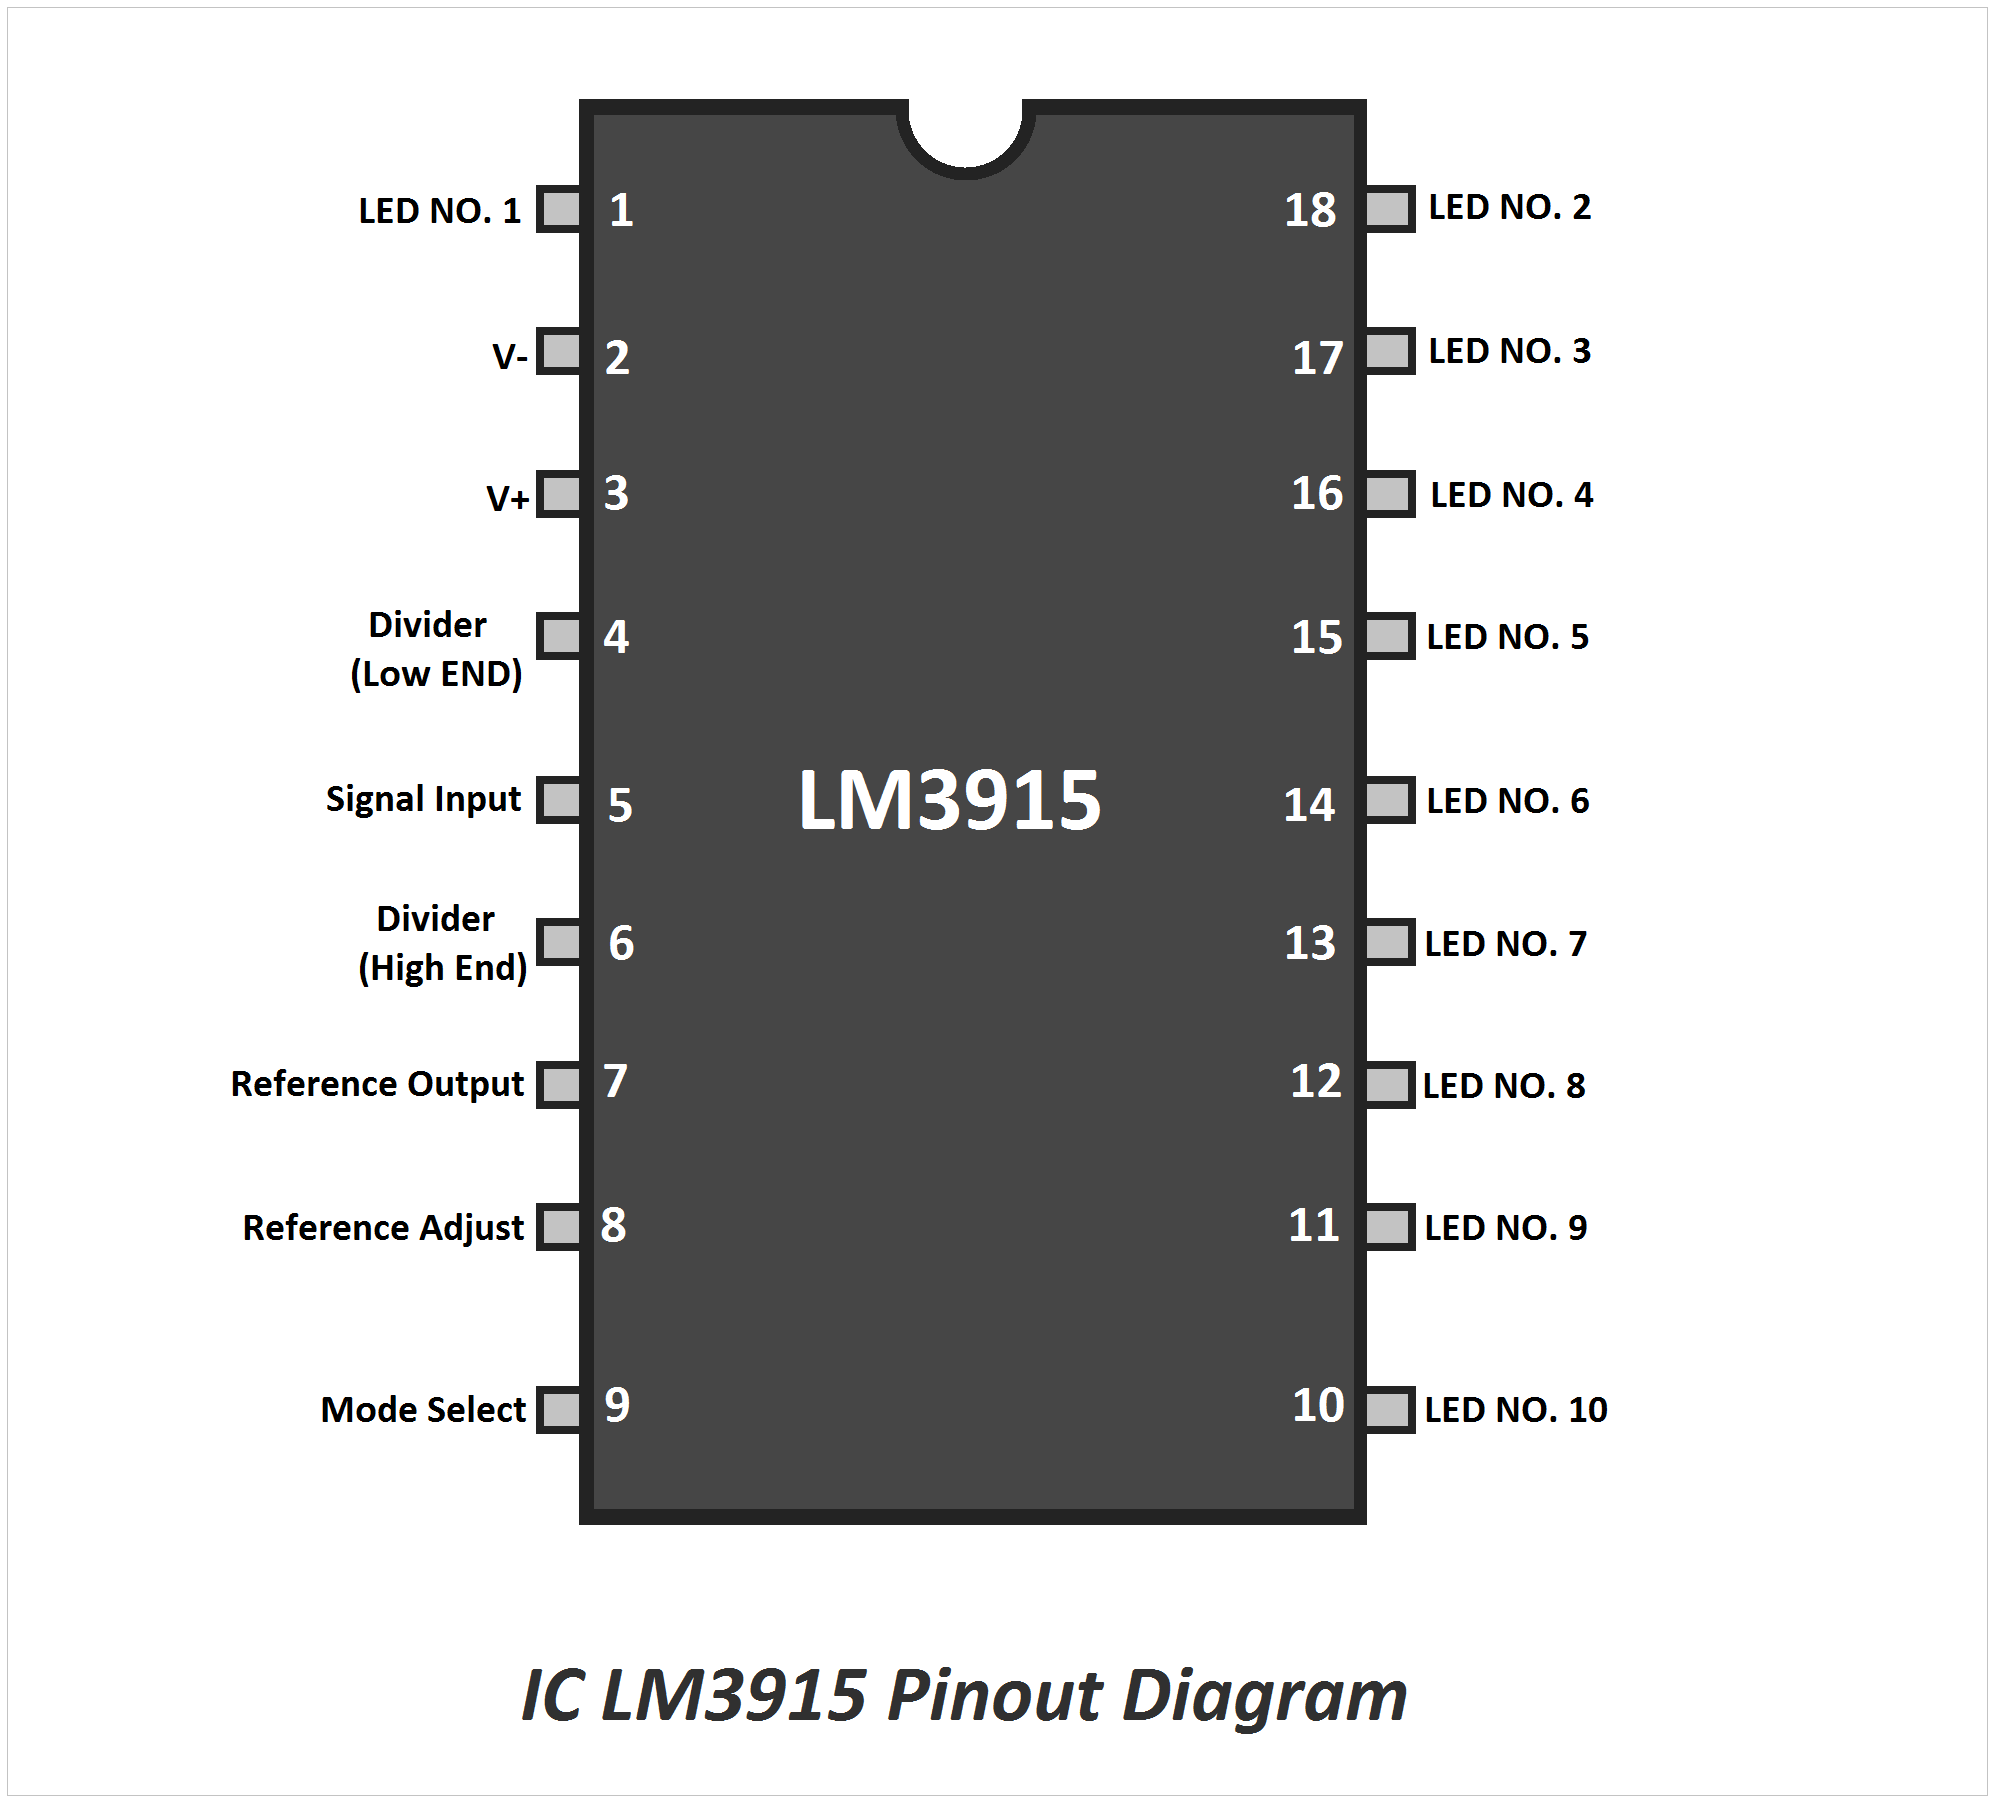 IC LM3915 Pinout Diagram